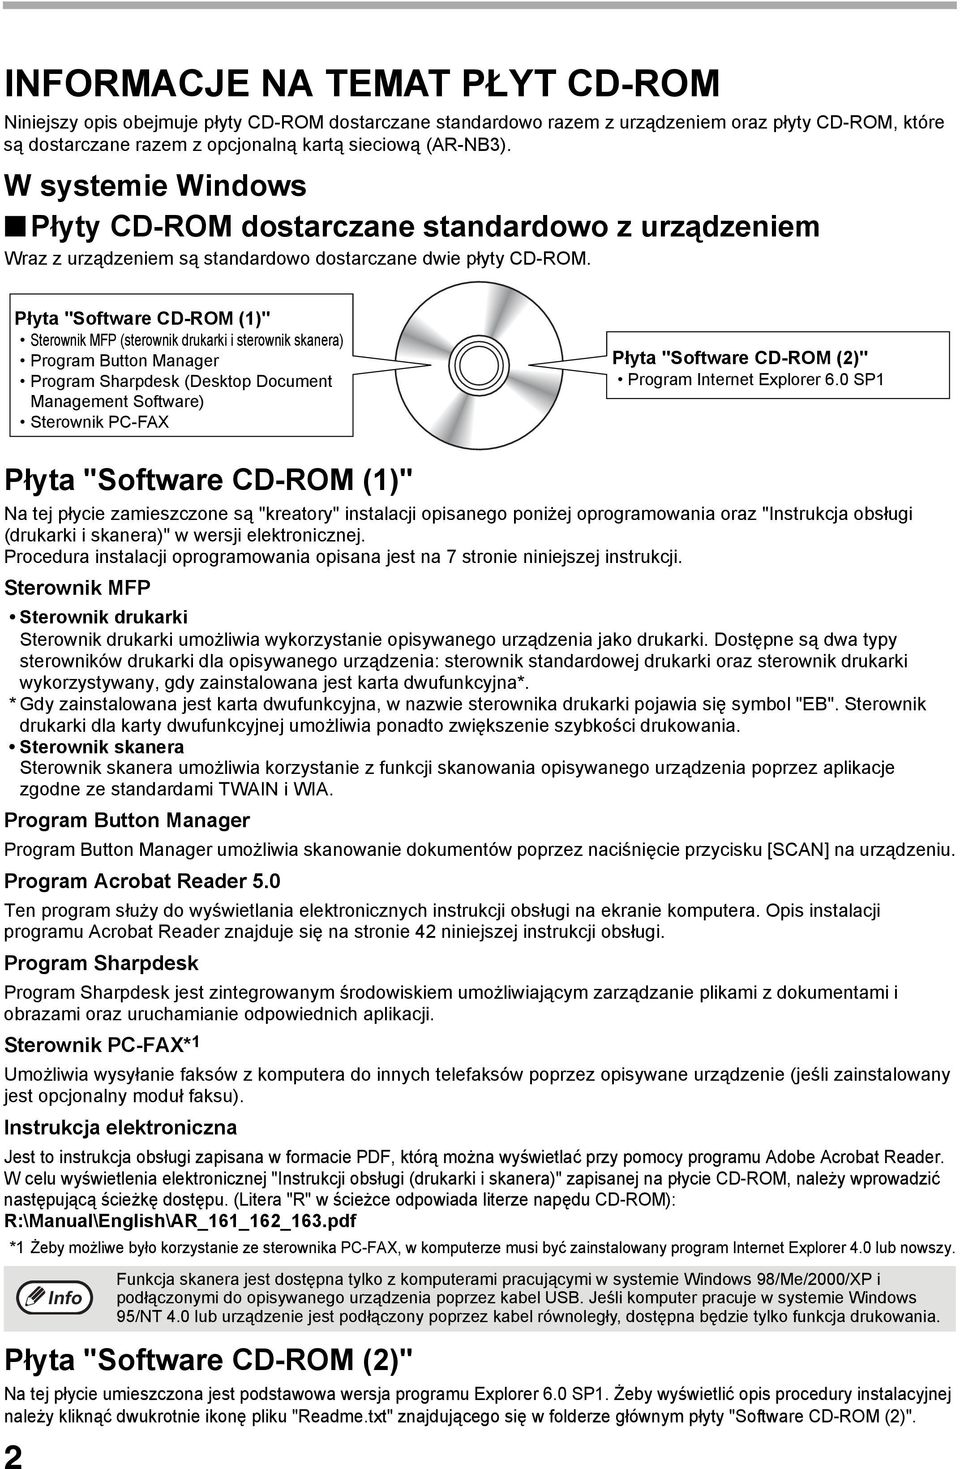 Płyta "Software CD-ROM ()" Sterownik MFP (sterownik drukarki i sterownik skanera) Program Button Manager Program Sharpdesk (Desktop Document Management Software) Sterownik PC-FAX Płyta "Software